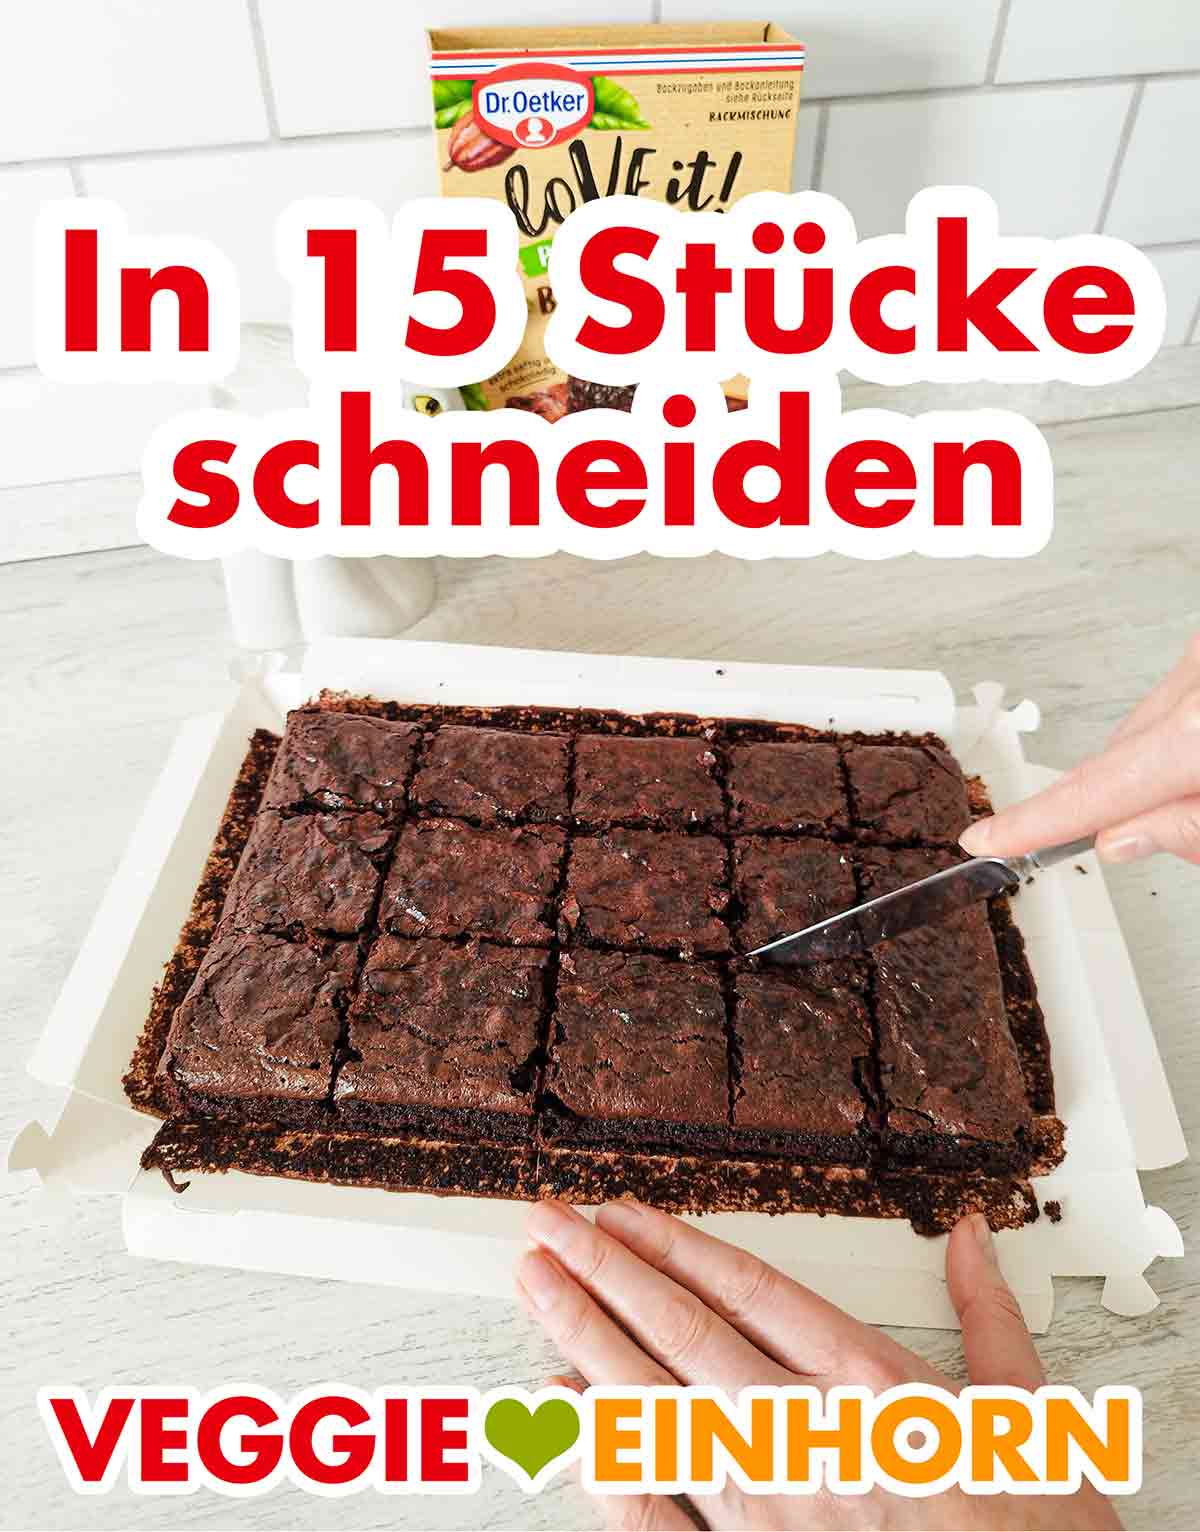 Die Brownies werden in 15 Stücke geschnitten.